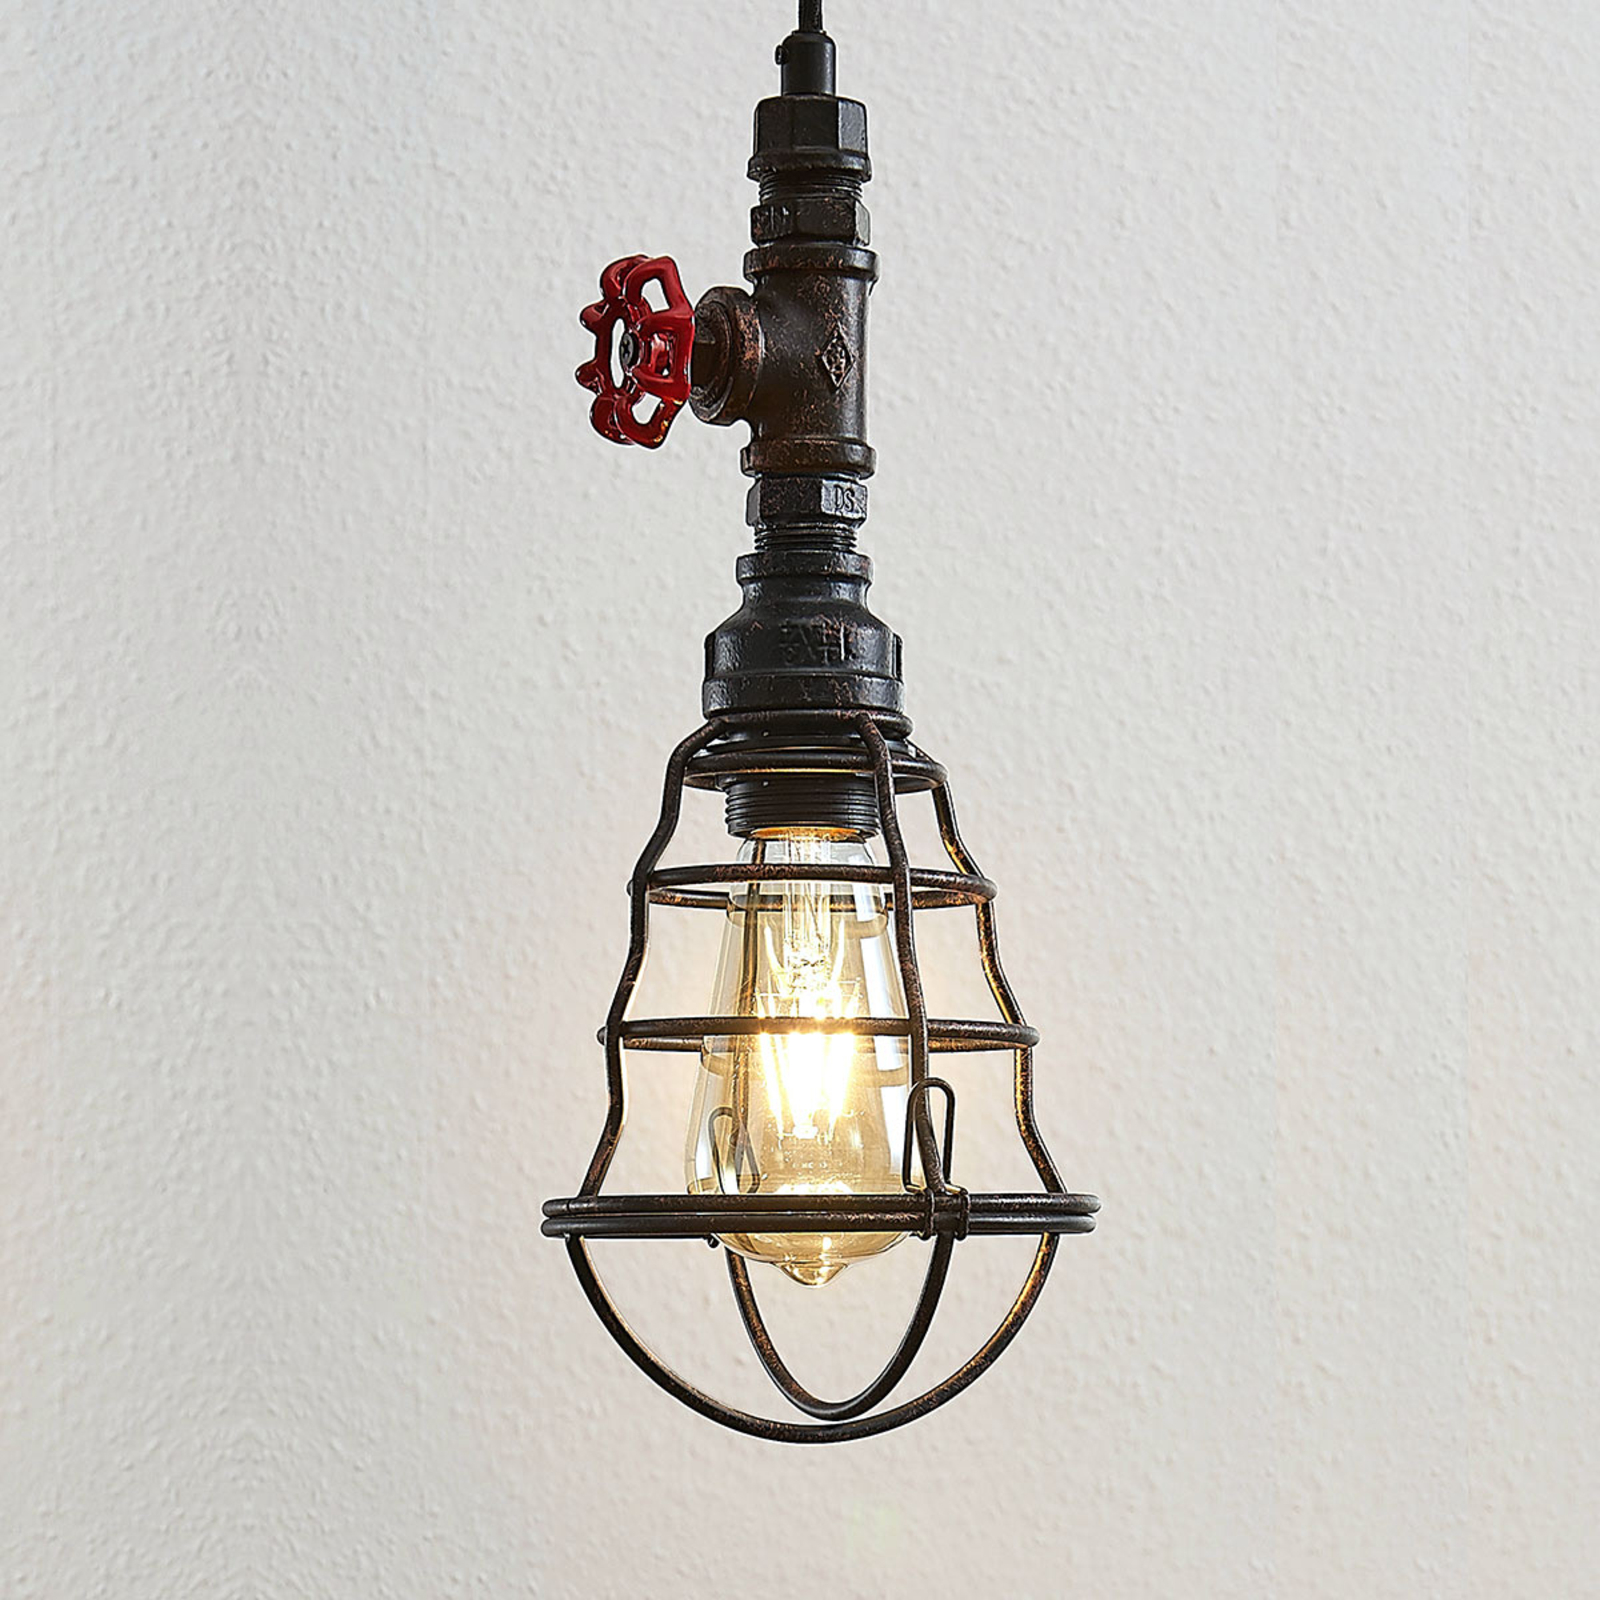 Hanglamp Josip, met één lampje